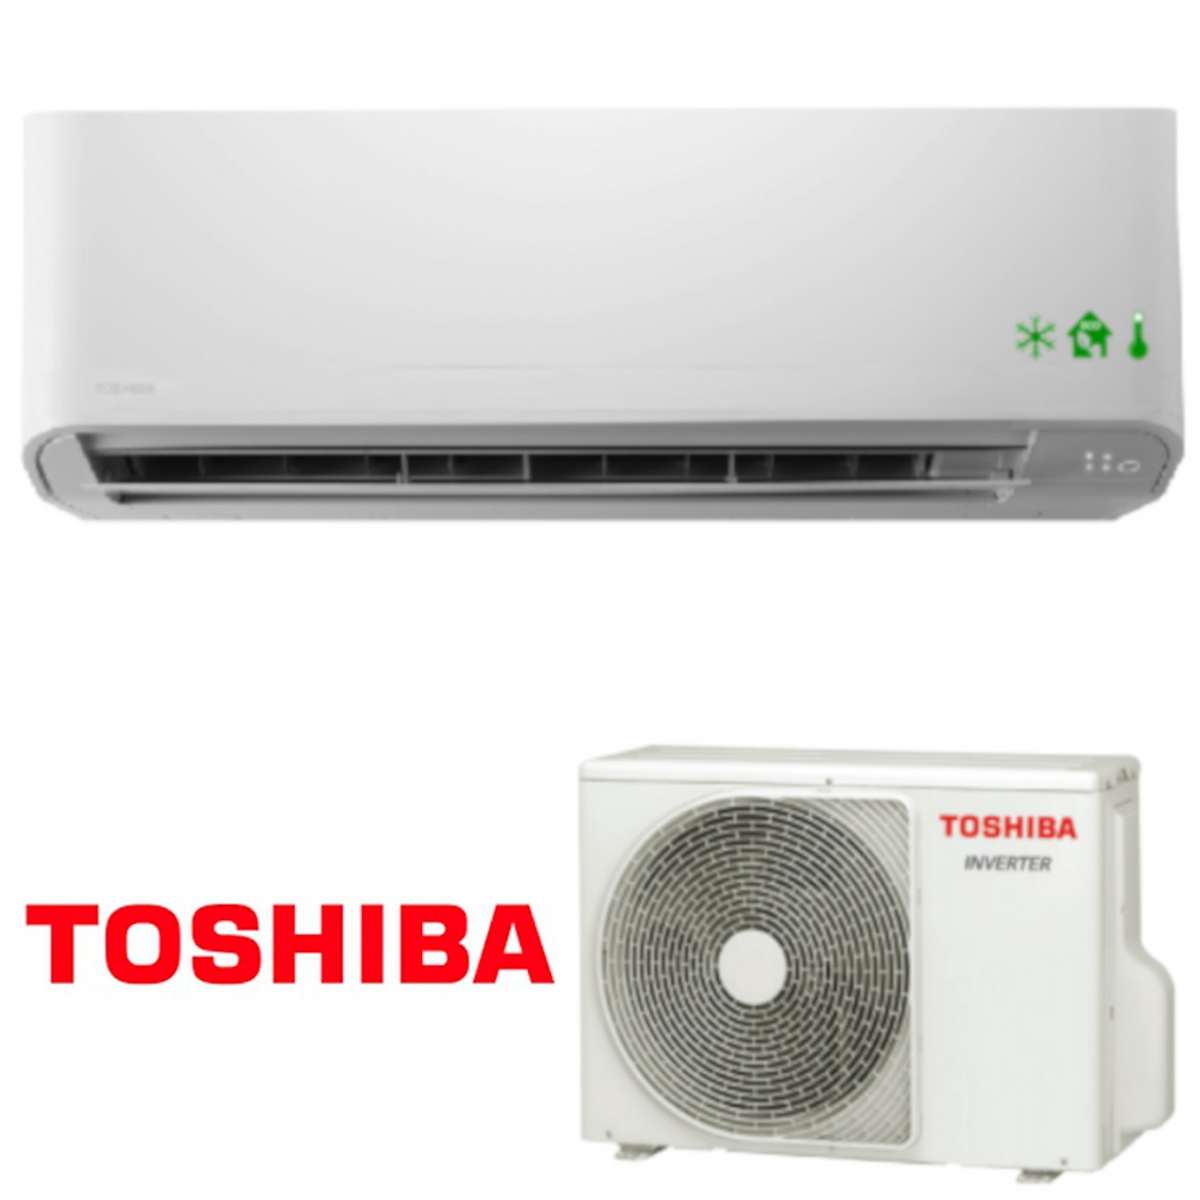 TOSHIBA SEIYA 2 2.5 kW